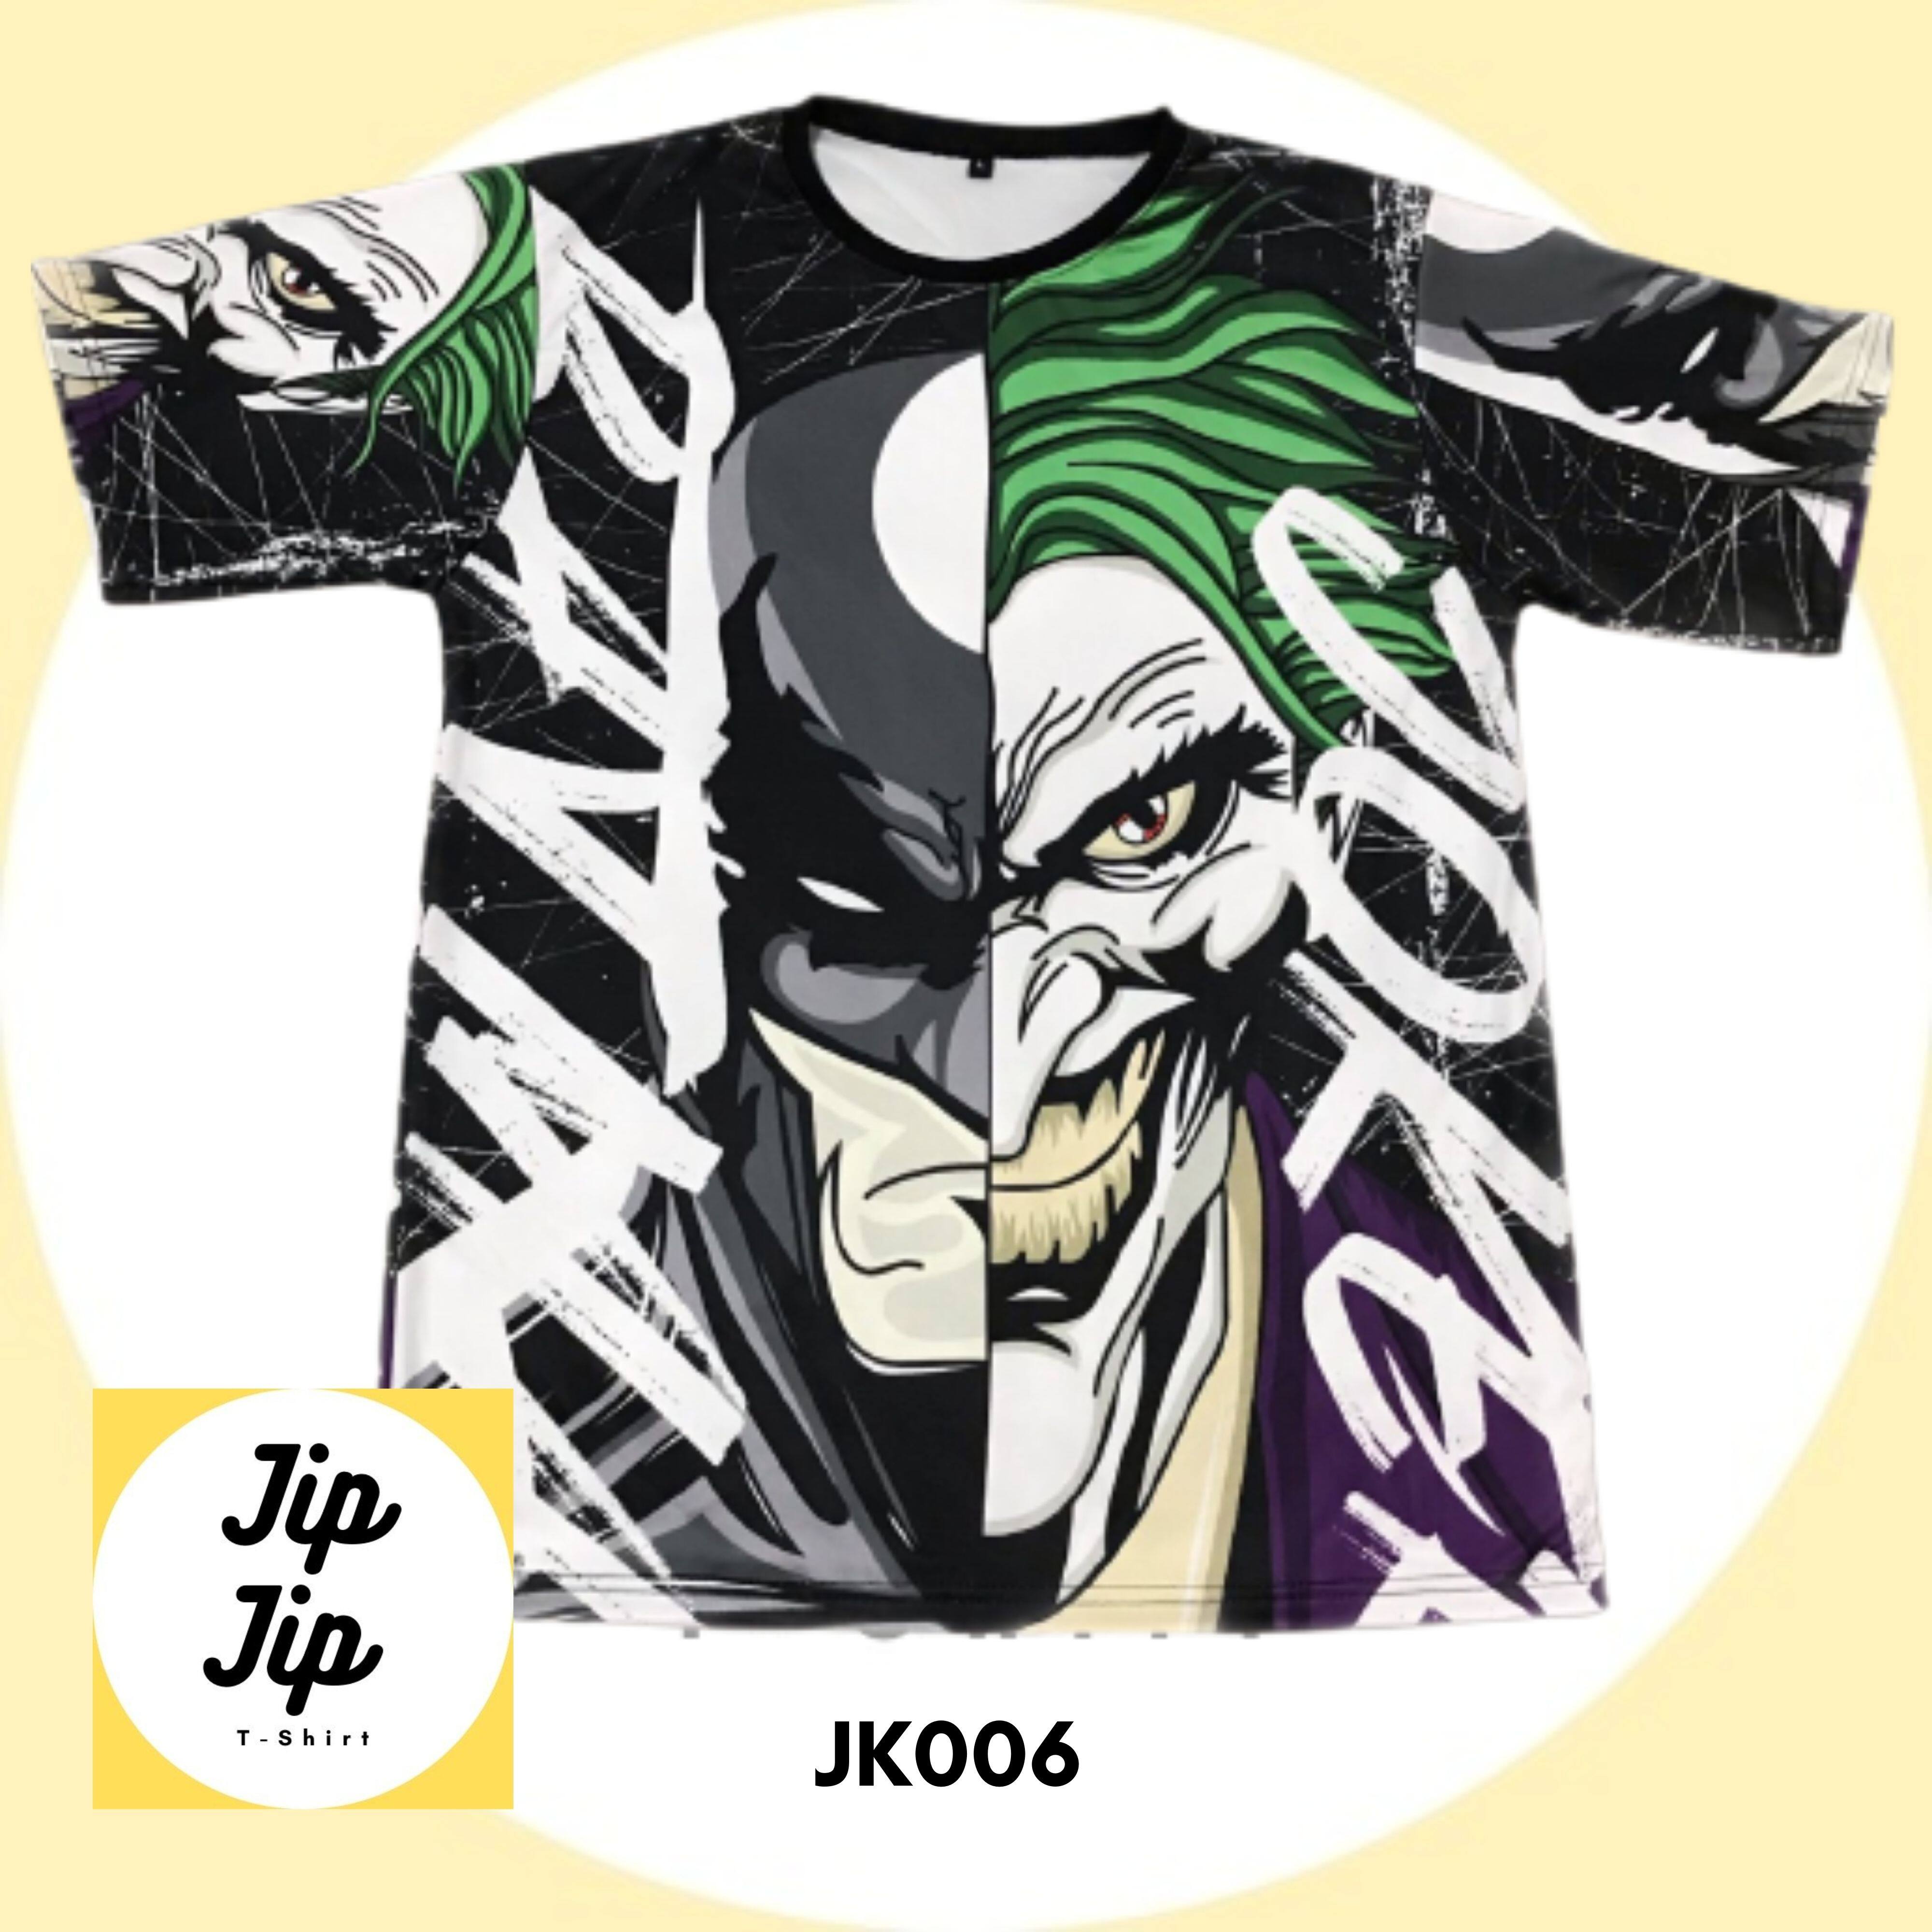 ?JIPJIP?เสื้อยืด ราคาถูก [มีเก็บเงินปลายทาง] ลาย การ์ตูน THE JOKER Street DC Comic M L XL คอกลม Oversize เเขนสั้น T-Shirt